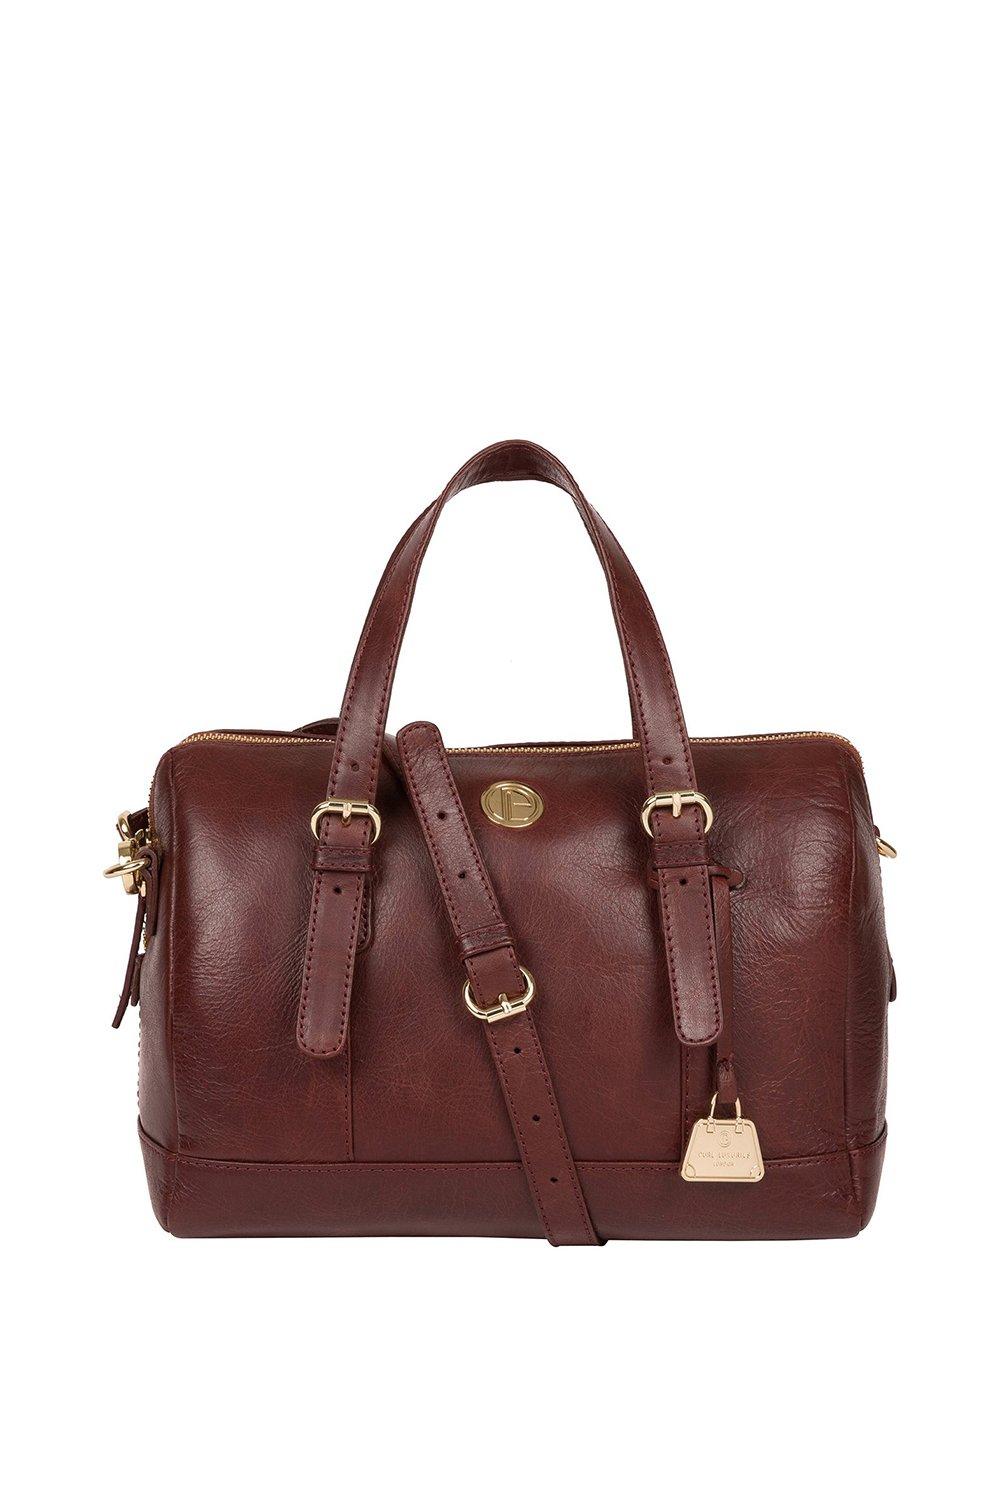 Pure Luxuries London 'Iris' Leather Handbag | Debenhams